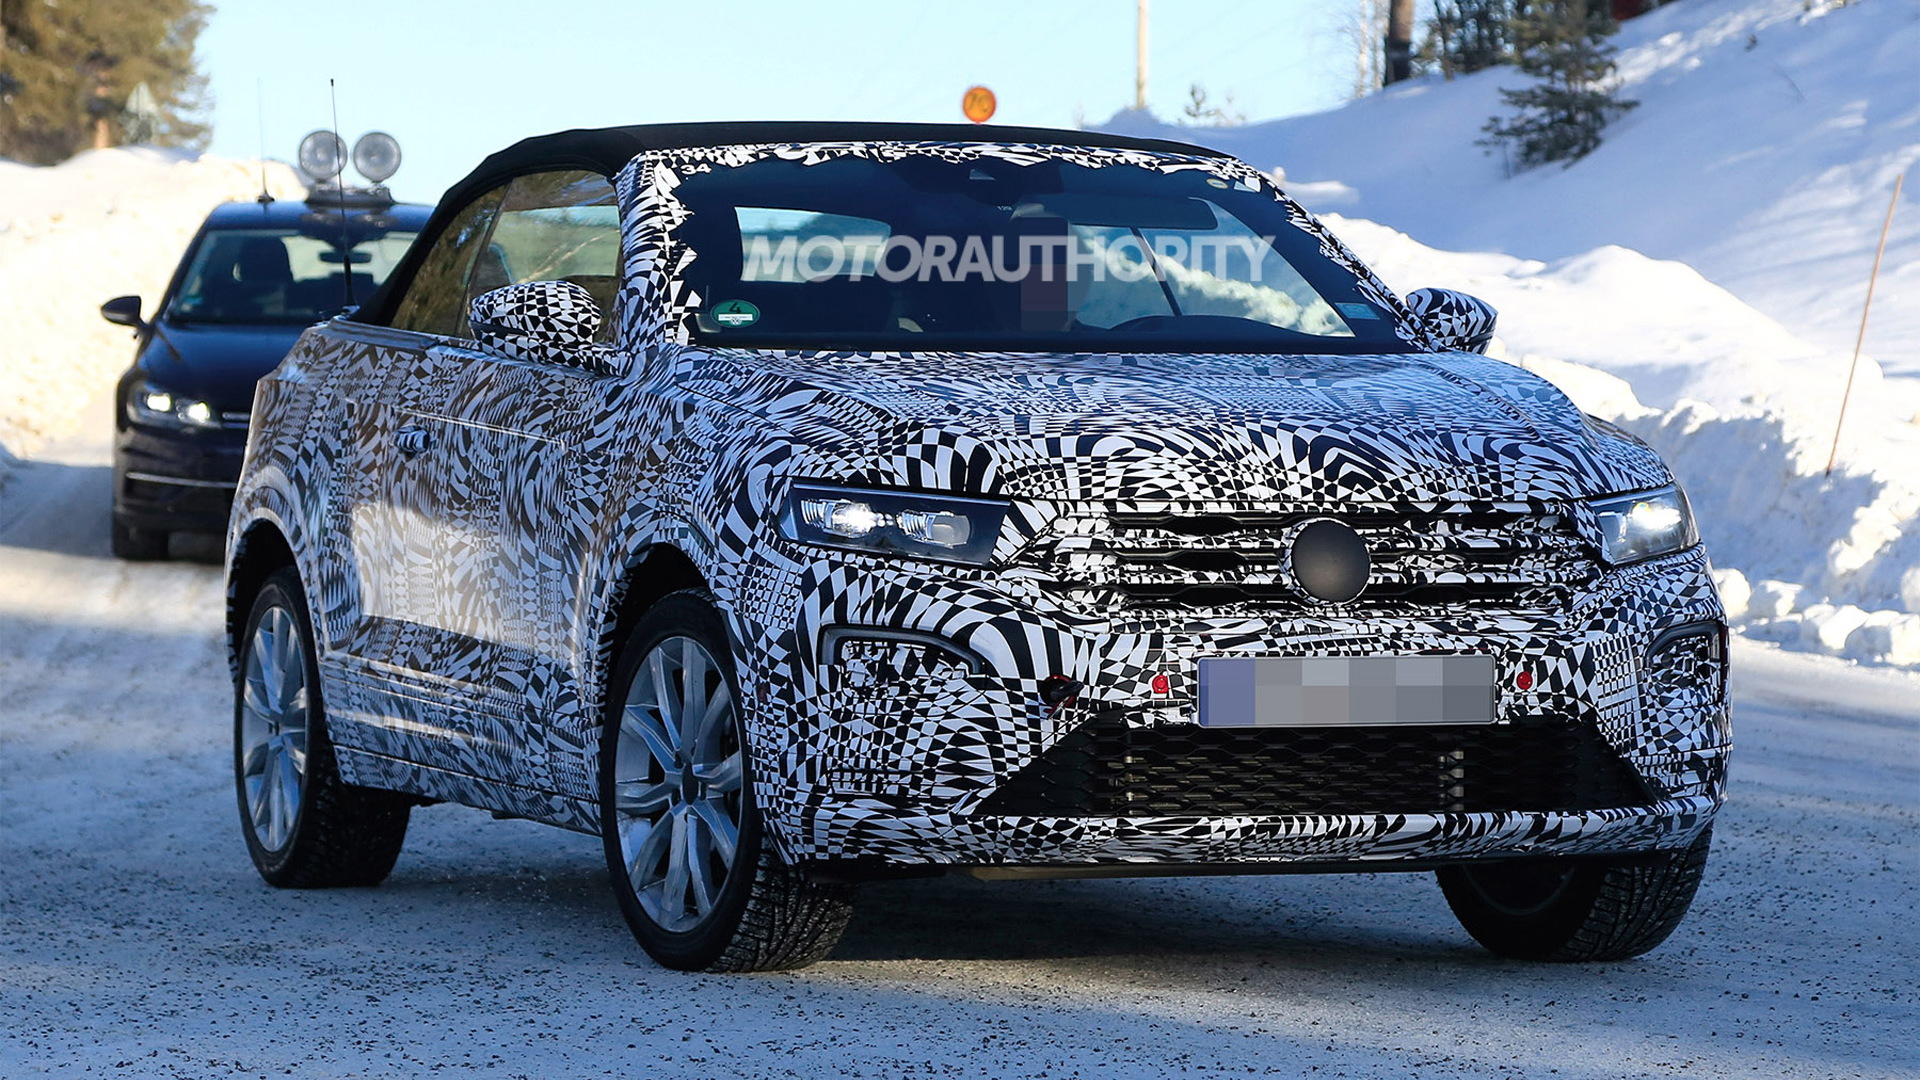 2020 Volkswagen T-Roc Cabriolet spy shots - Image via S. Baldauf/SB-Medien